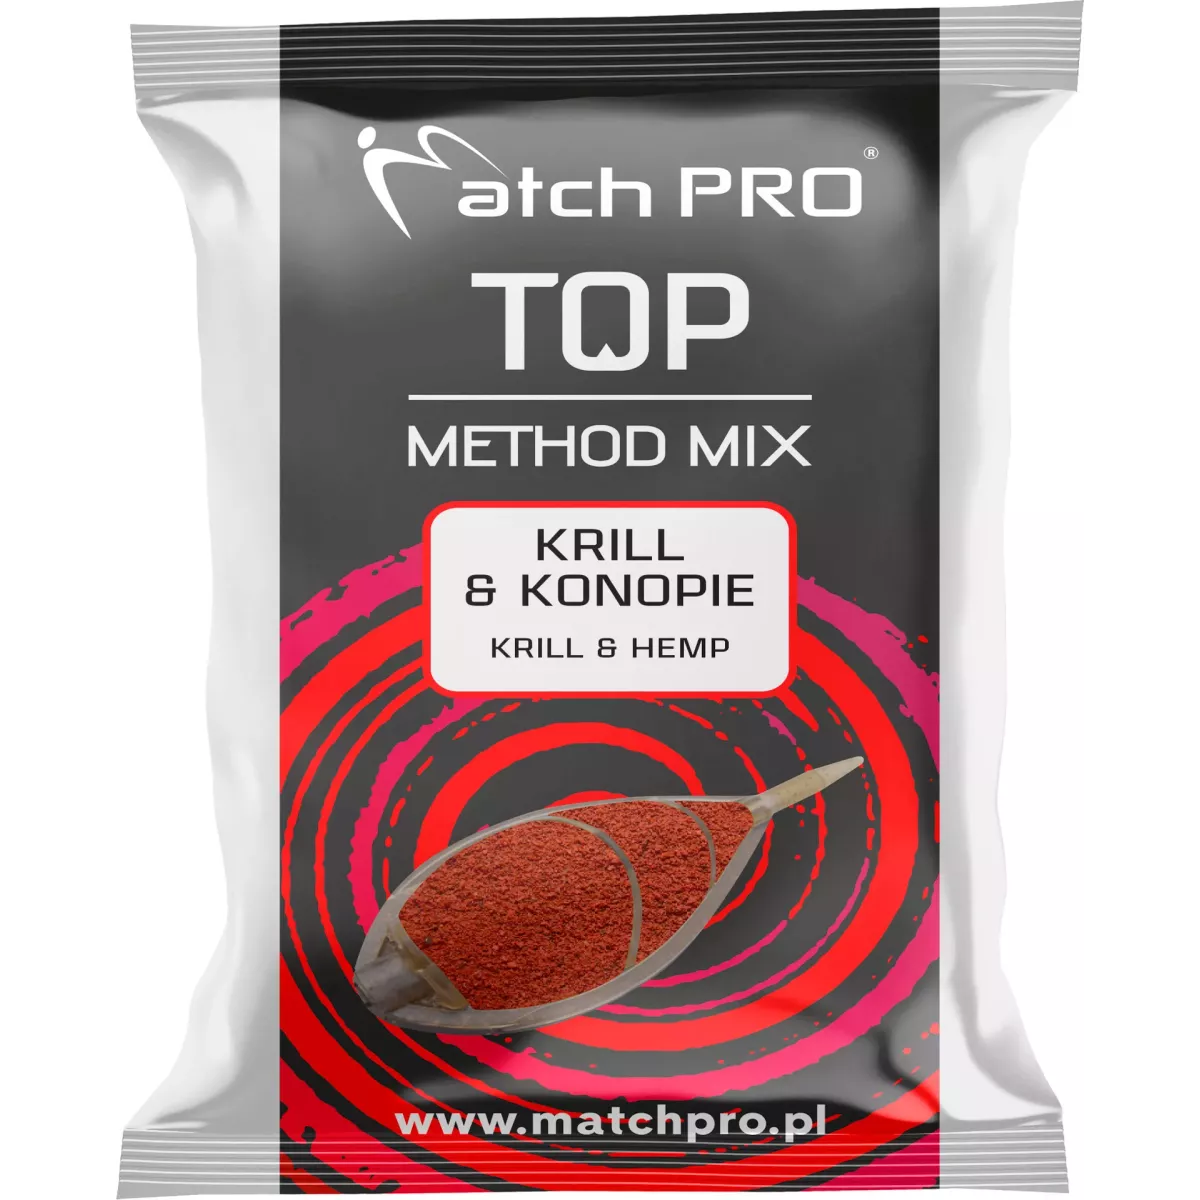 Zanęta MatchPro Method Mix TOP 700g - KRILL & KONOPIE